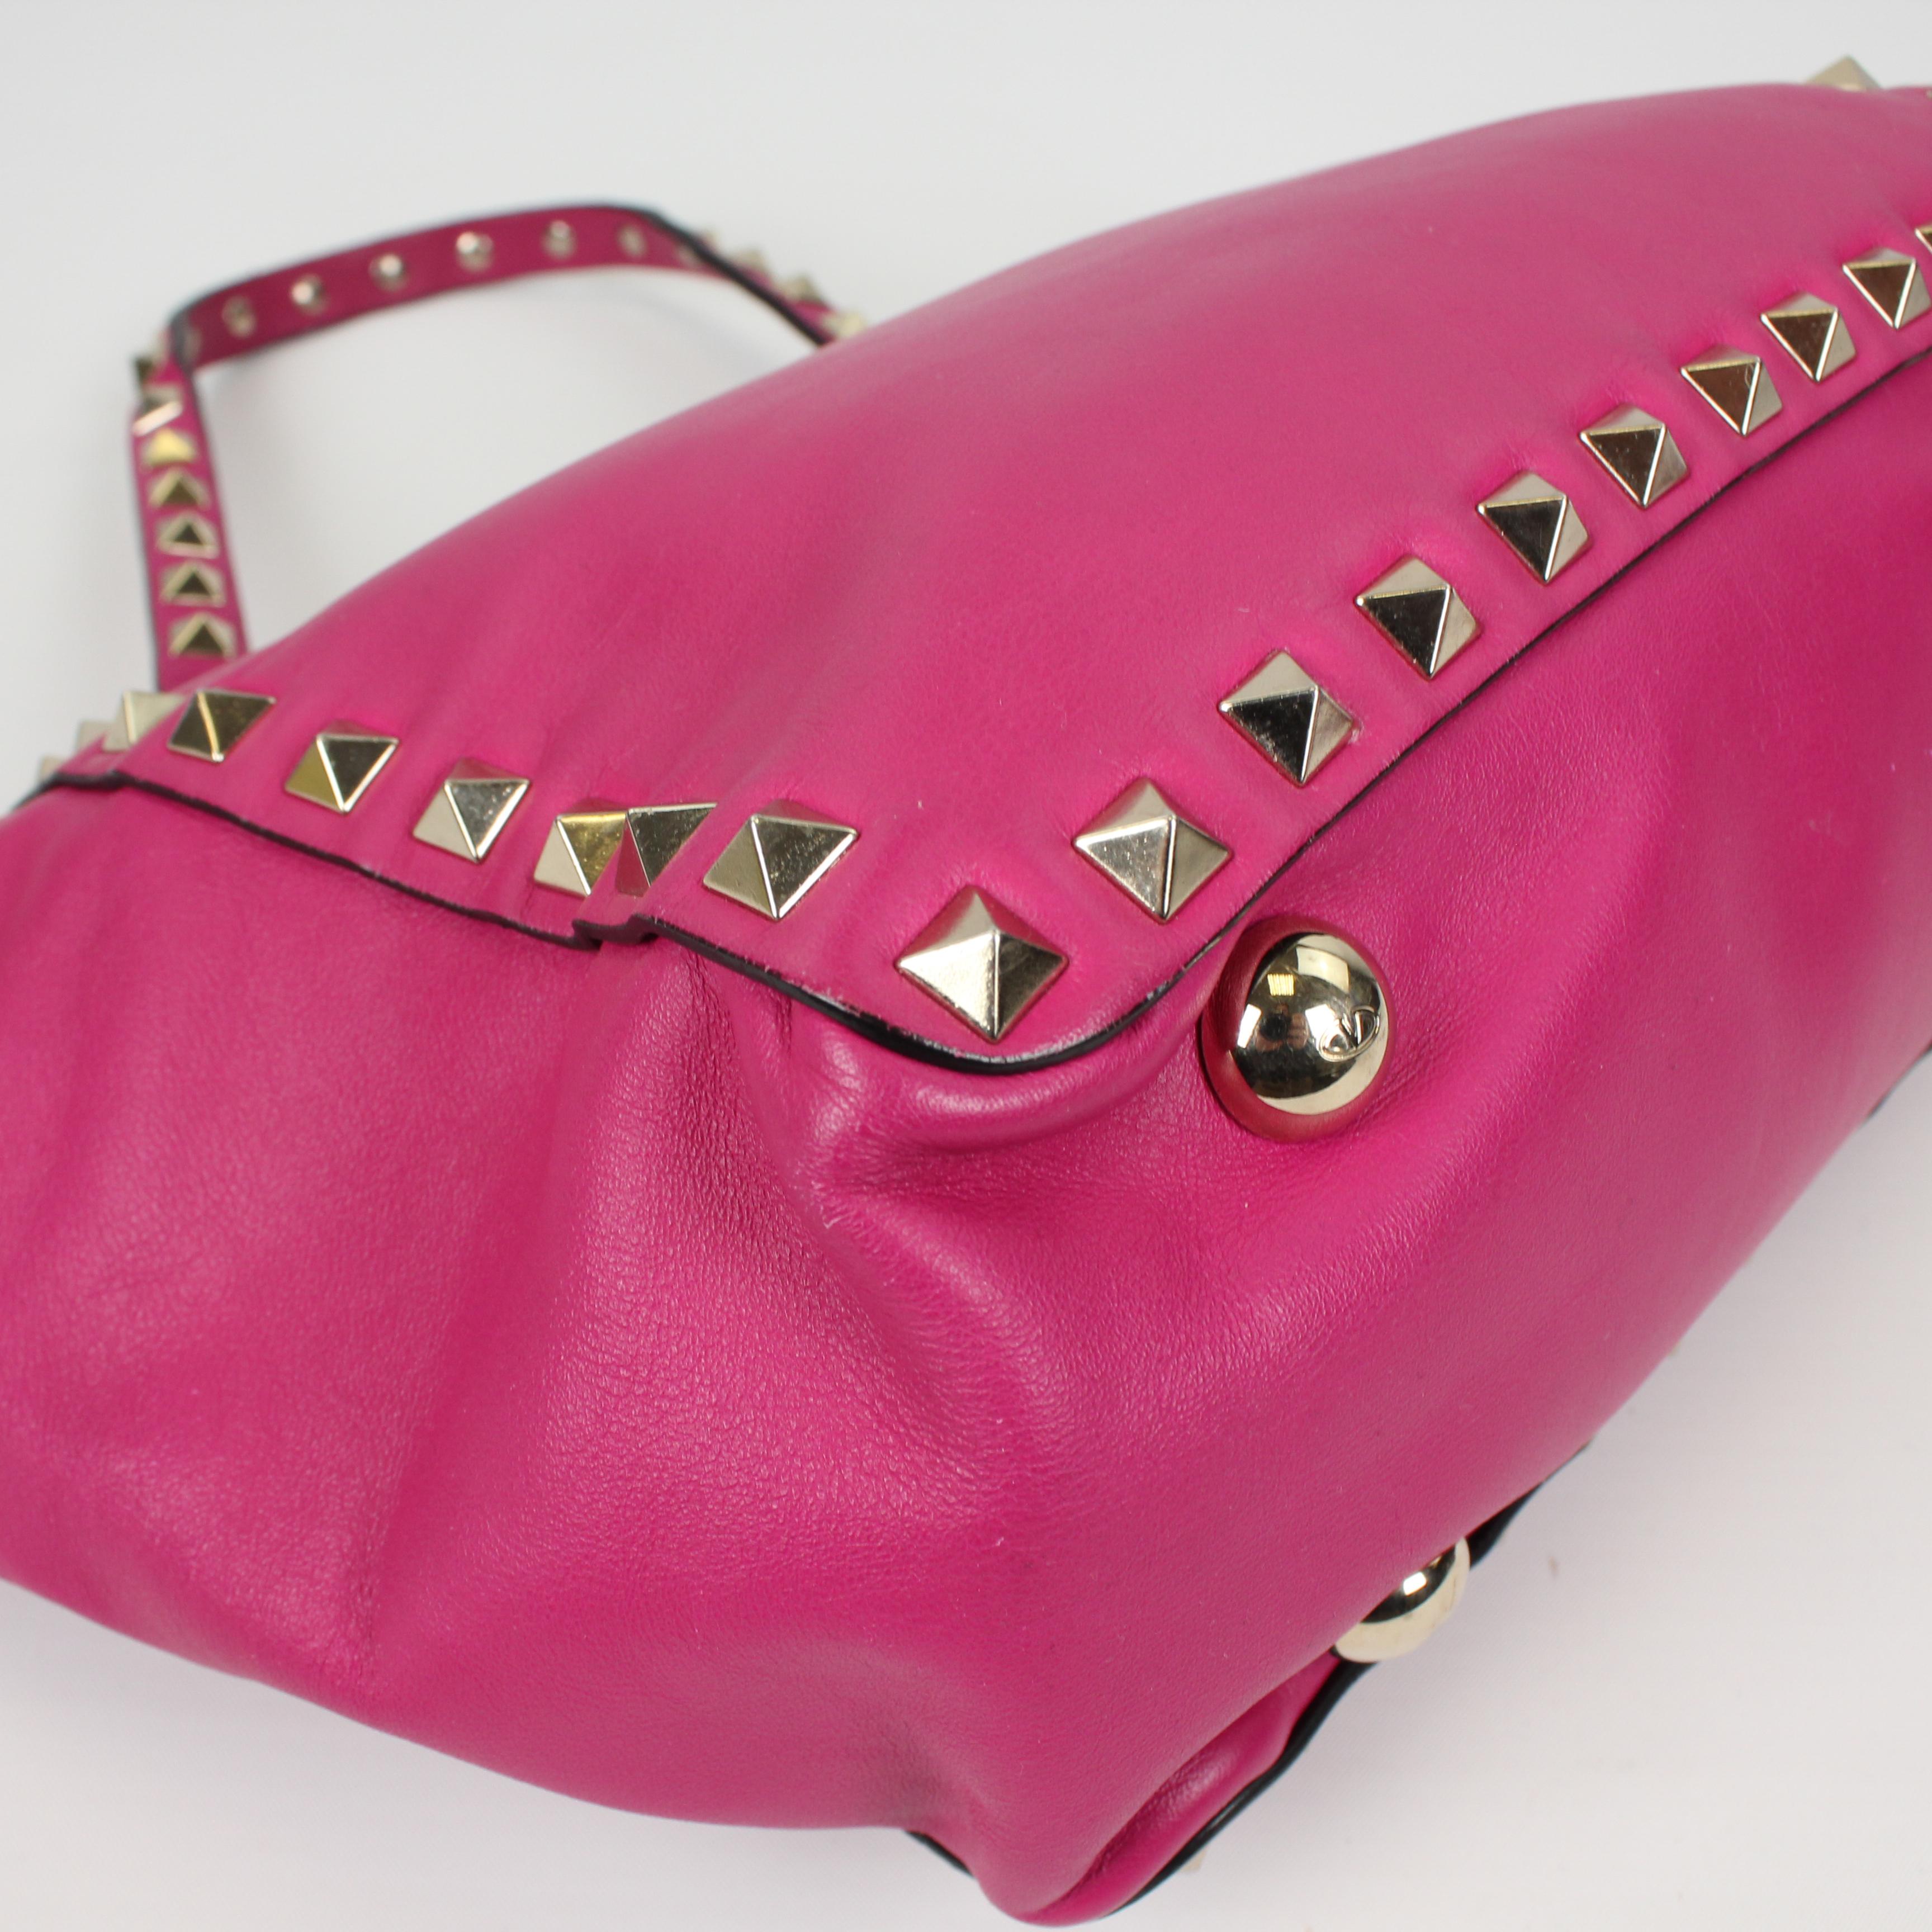 Valentino Garavani Rockstud leather handbag For Sale 12